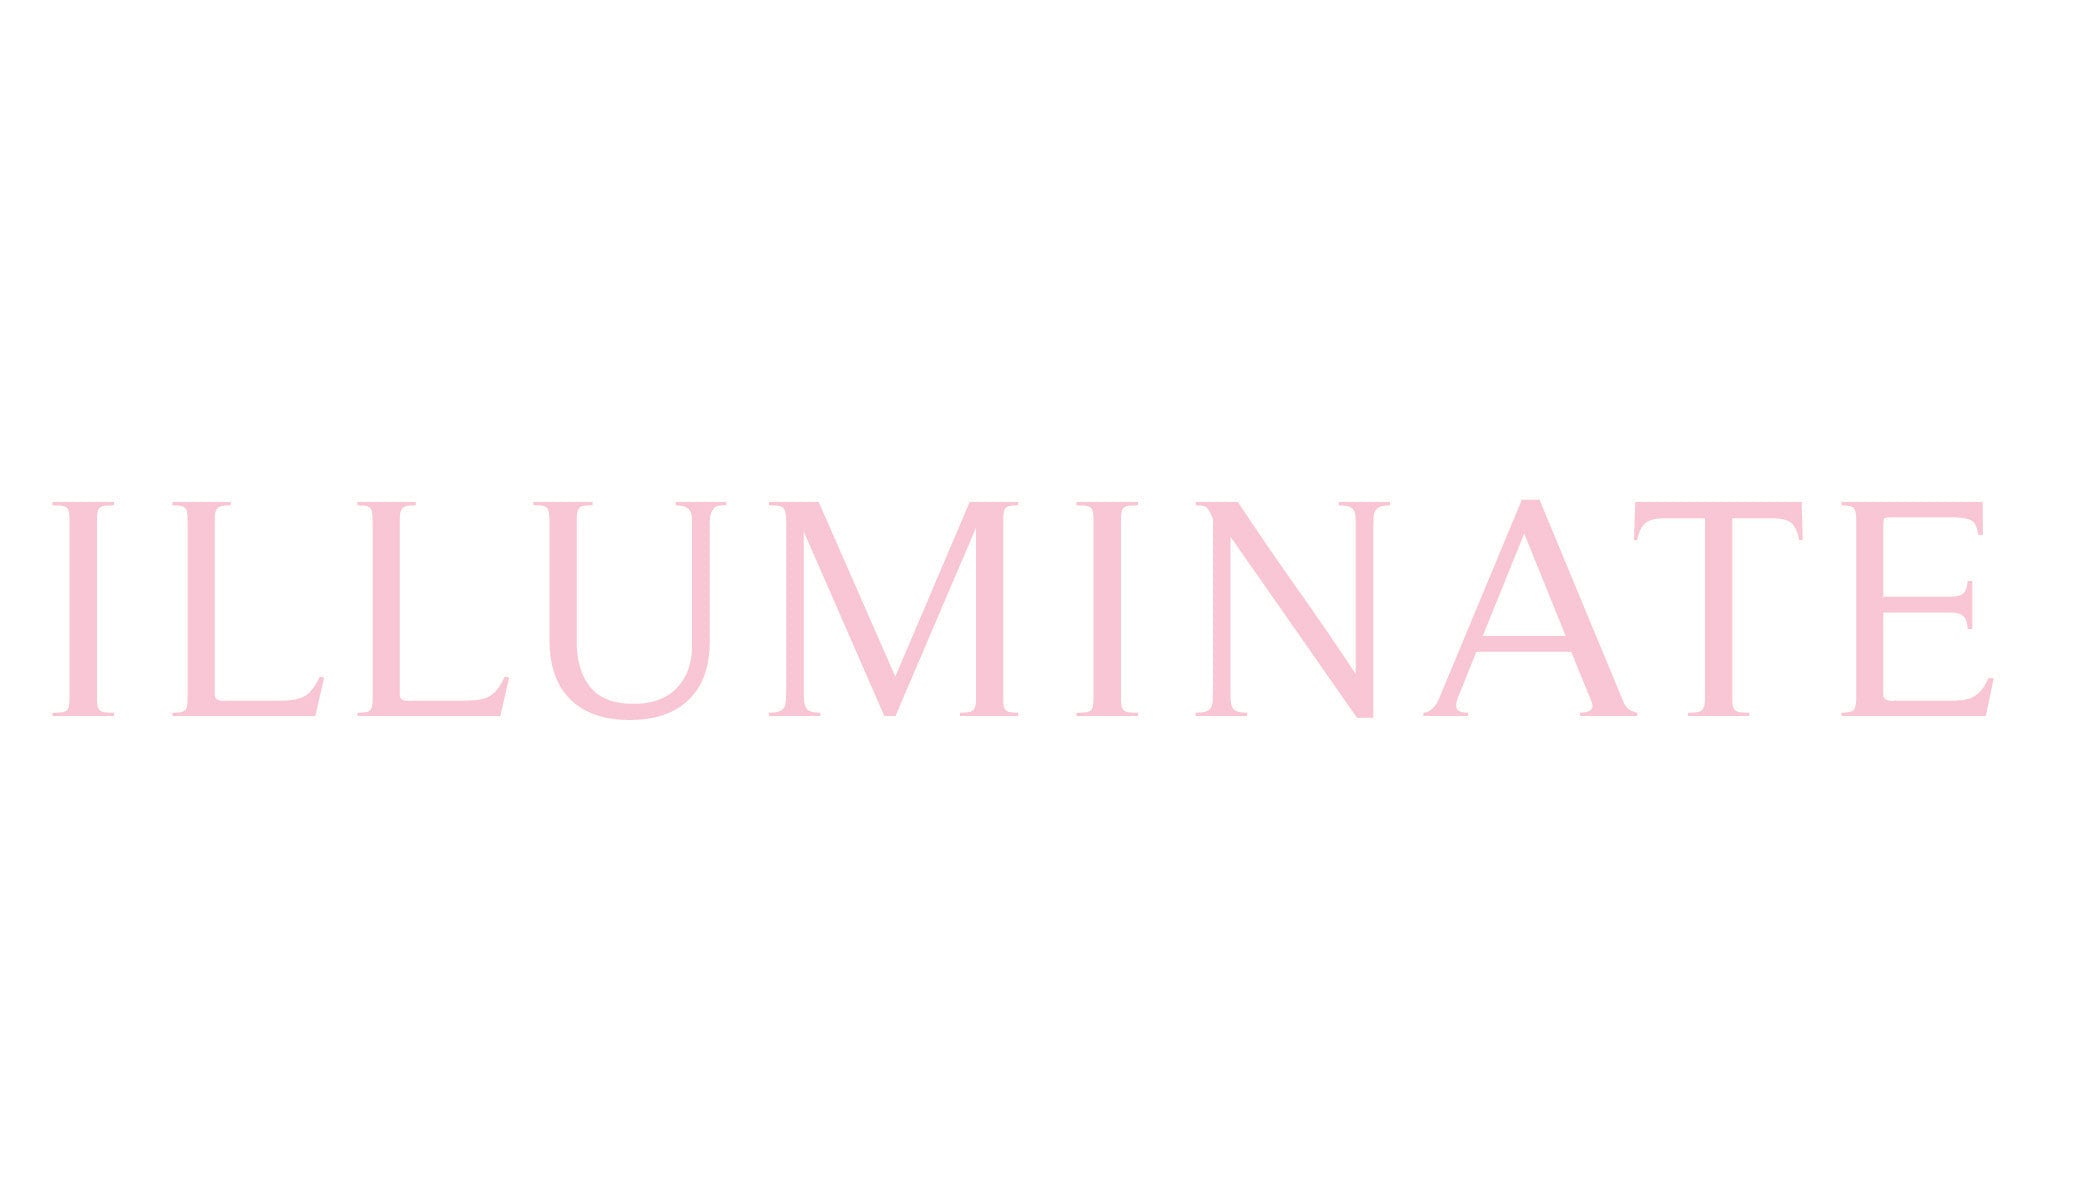 Illuminate by Shauna